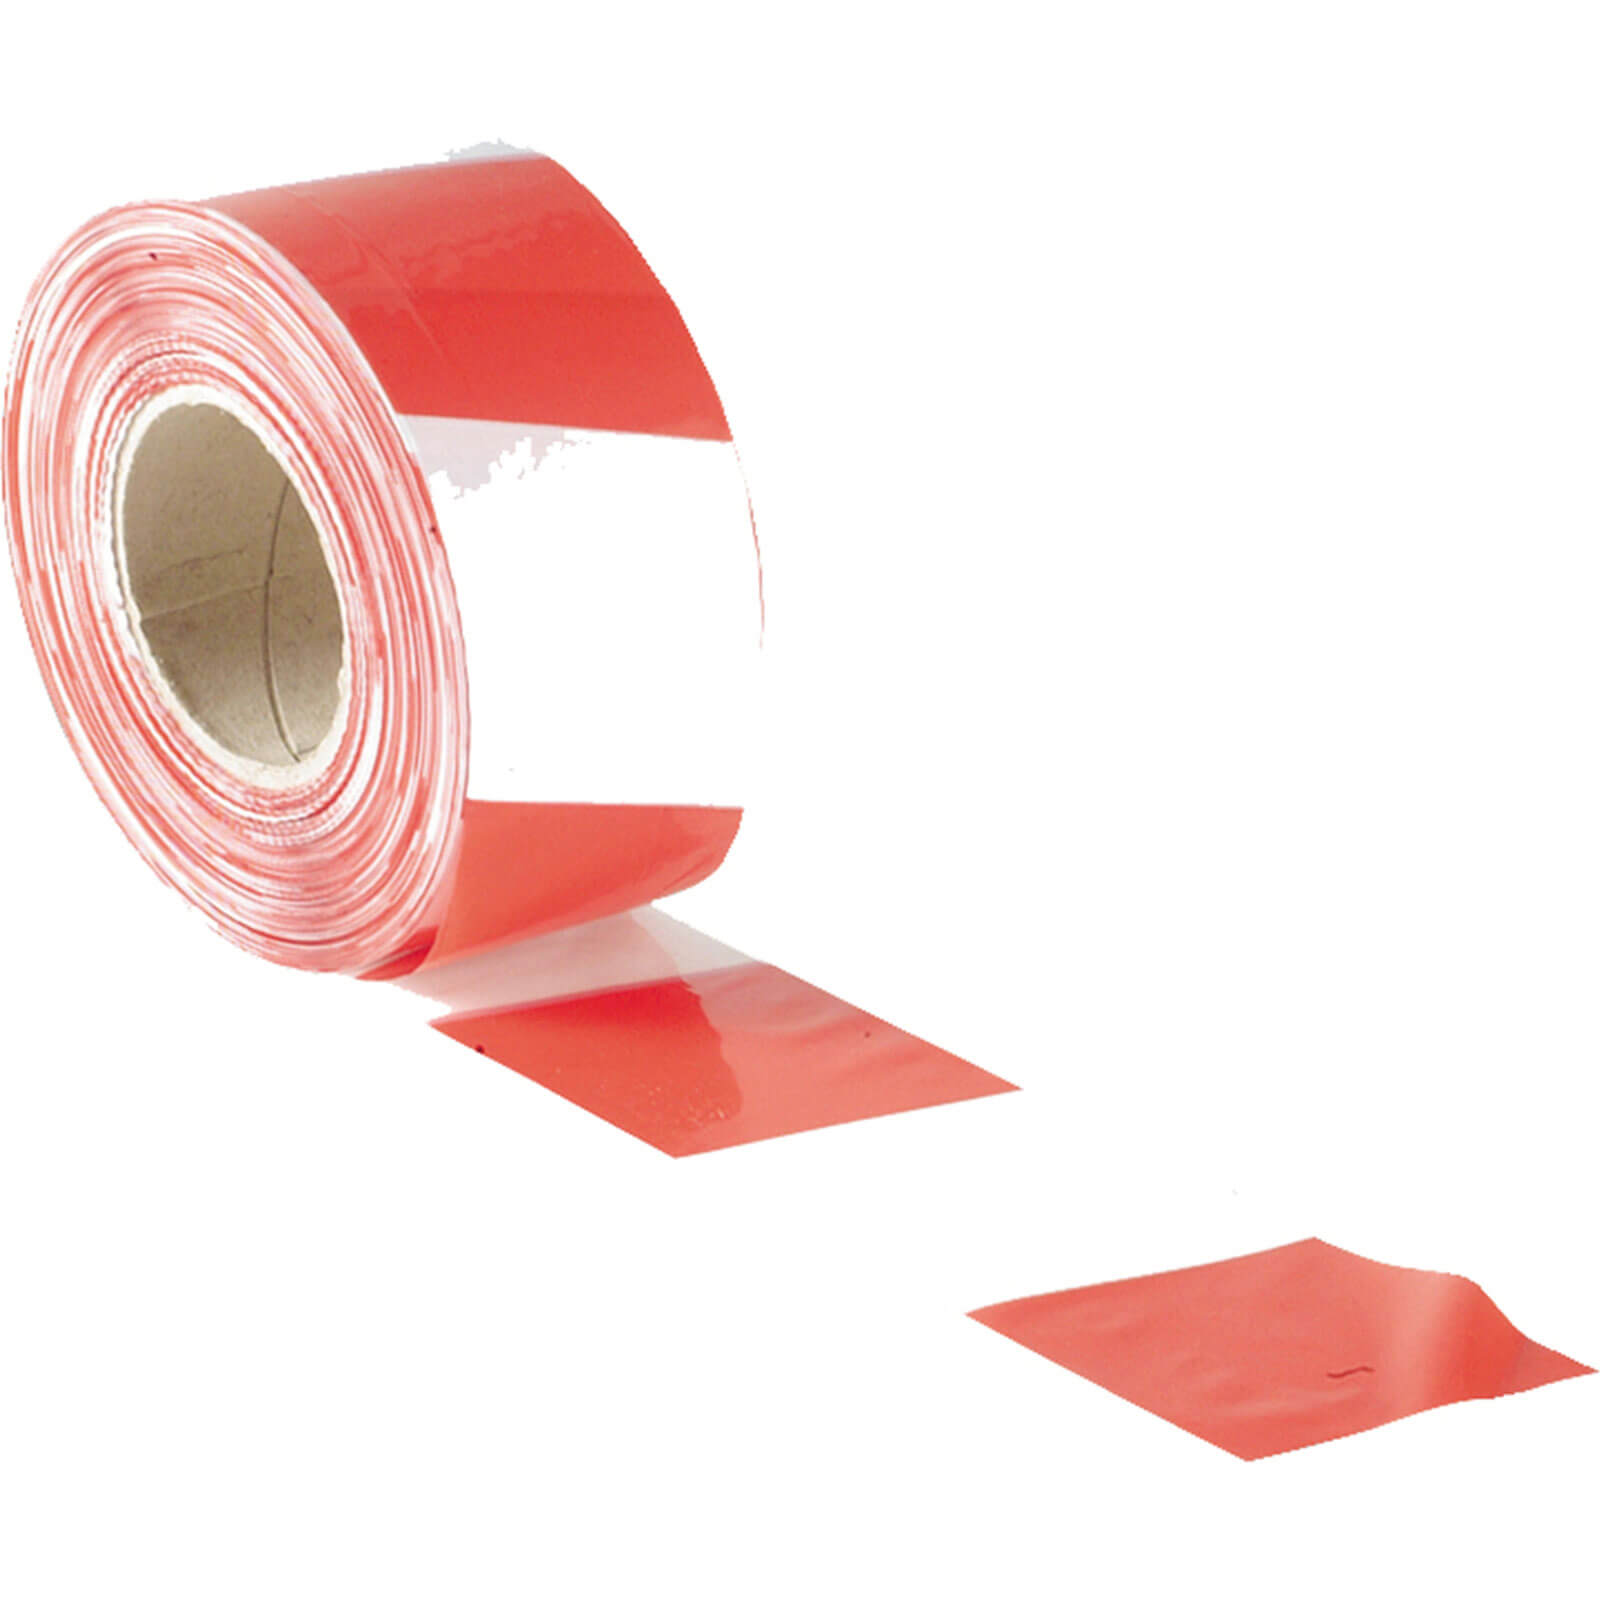 Image of Sirius Barrier Warning Tape Red / White 70mm 500m